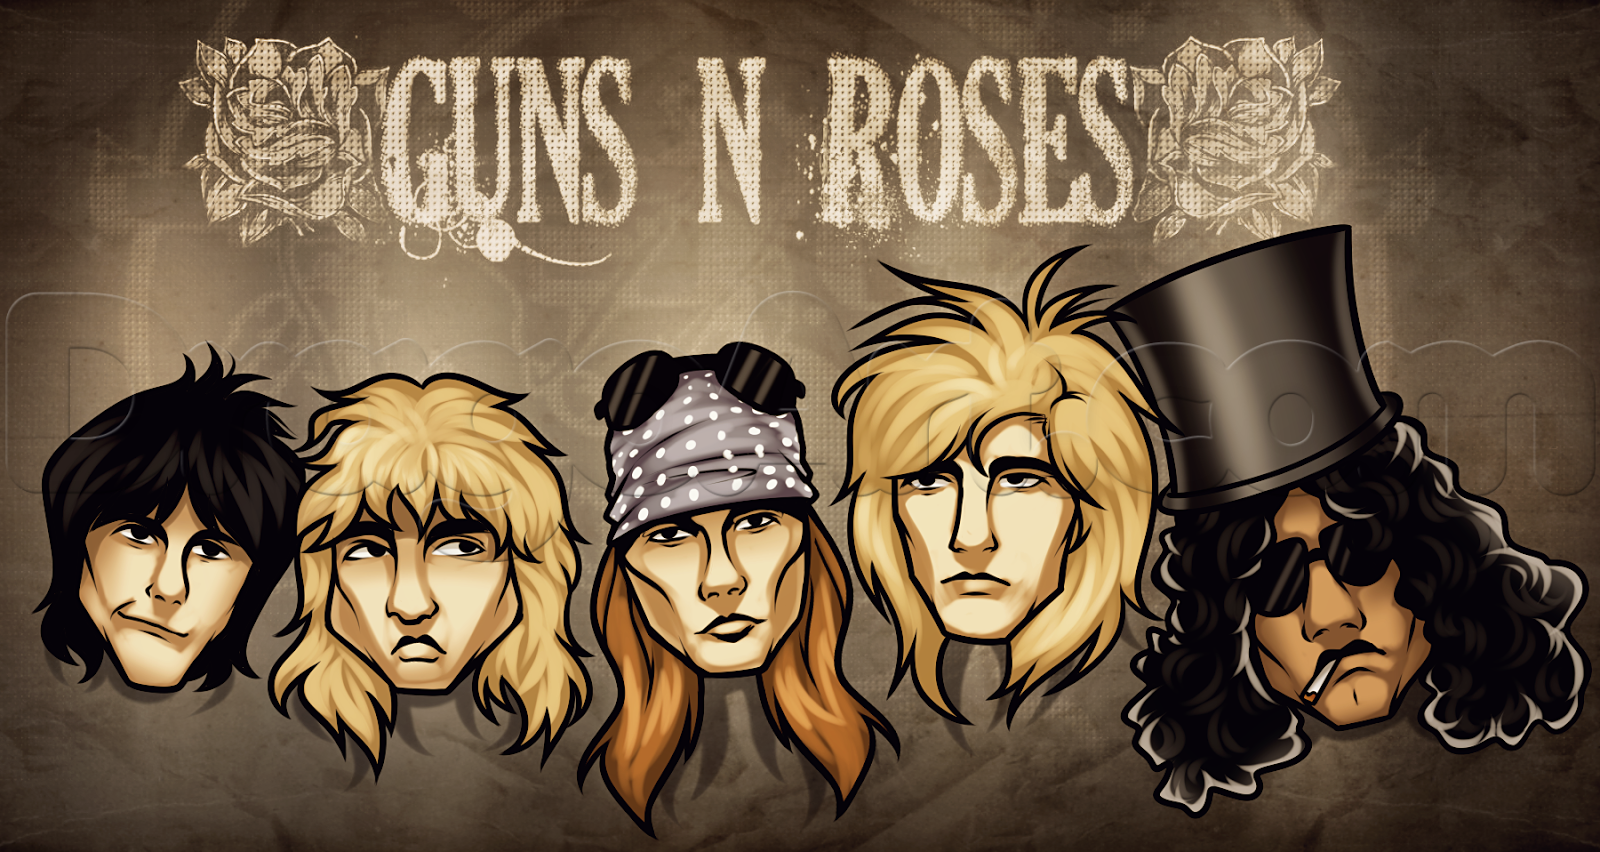 Download Kumpulan Lagu Guns N Roses full album Mp3 | surganyamusic